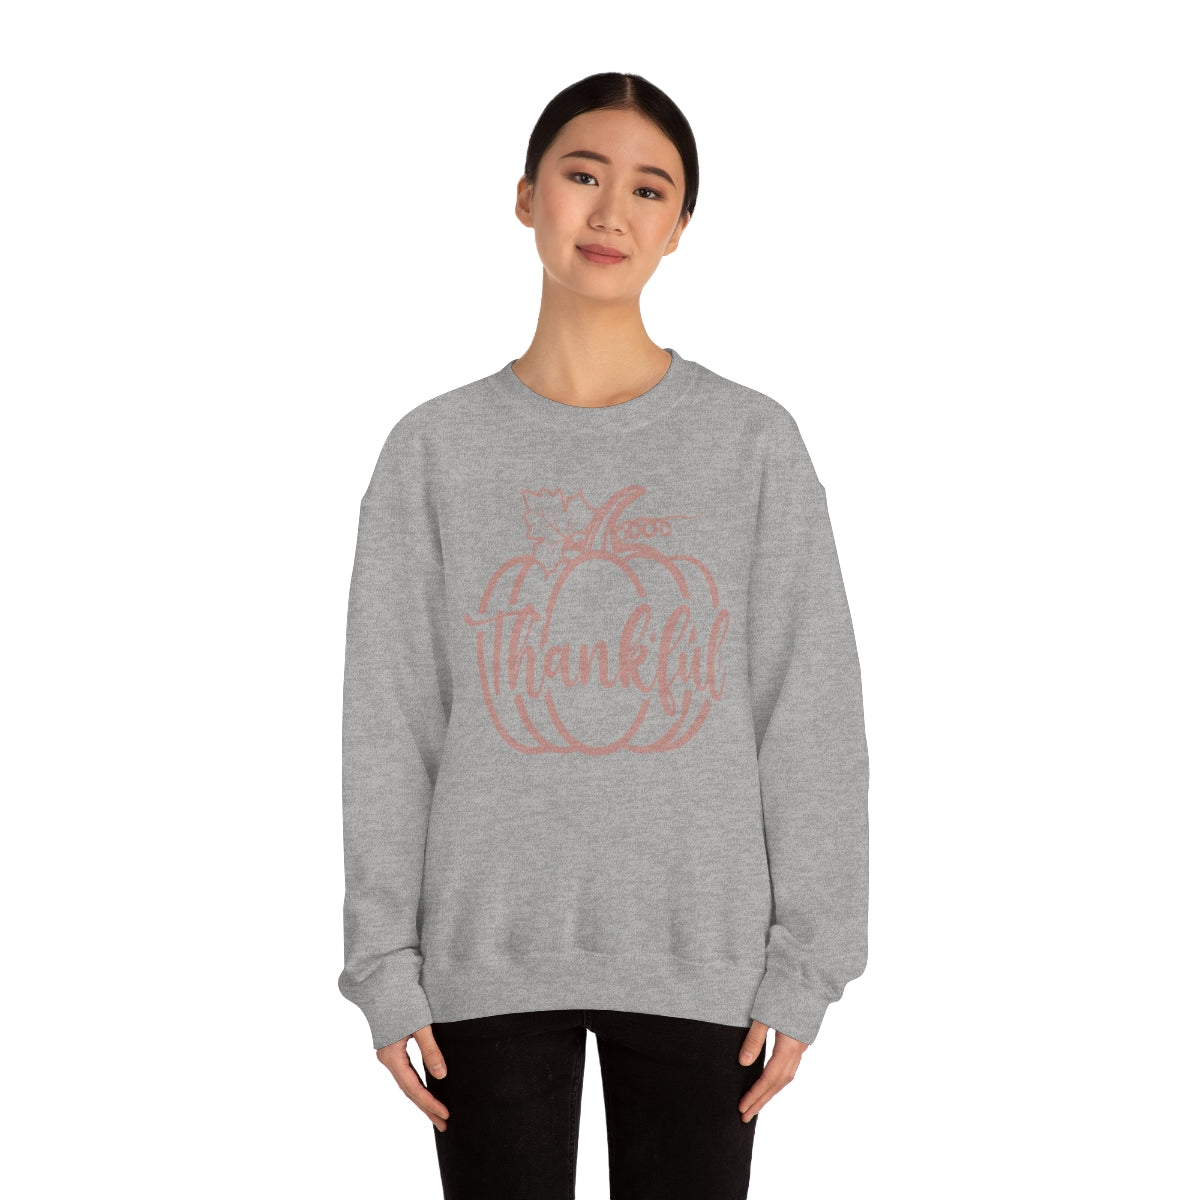 Thankful Pumpkin - Unisex Heavy Blend™ Crewneck Sweatshirt